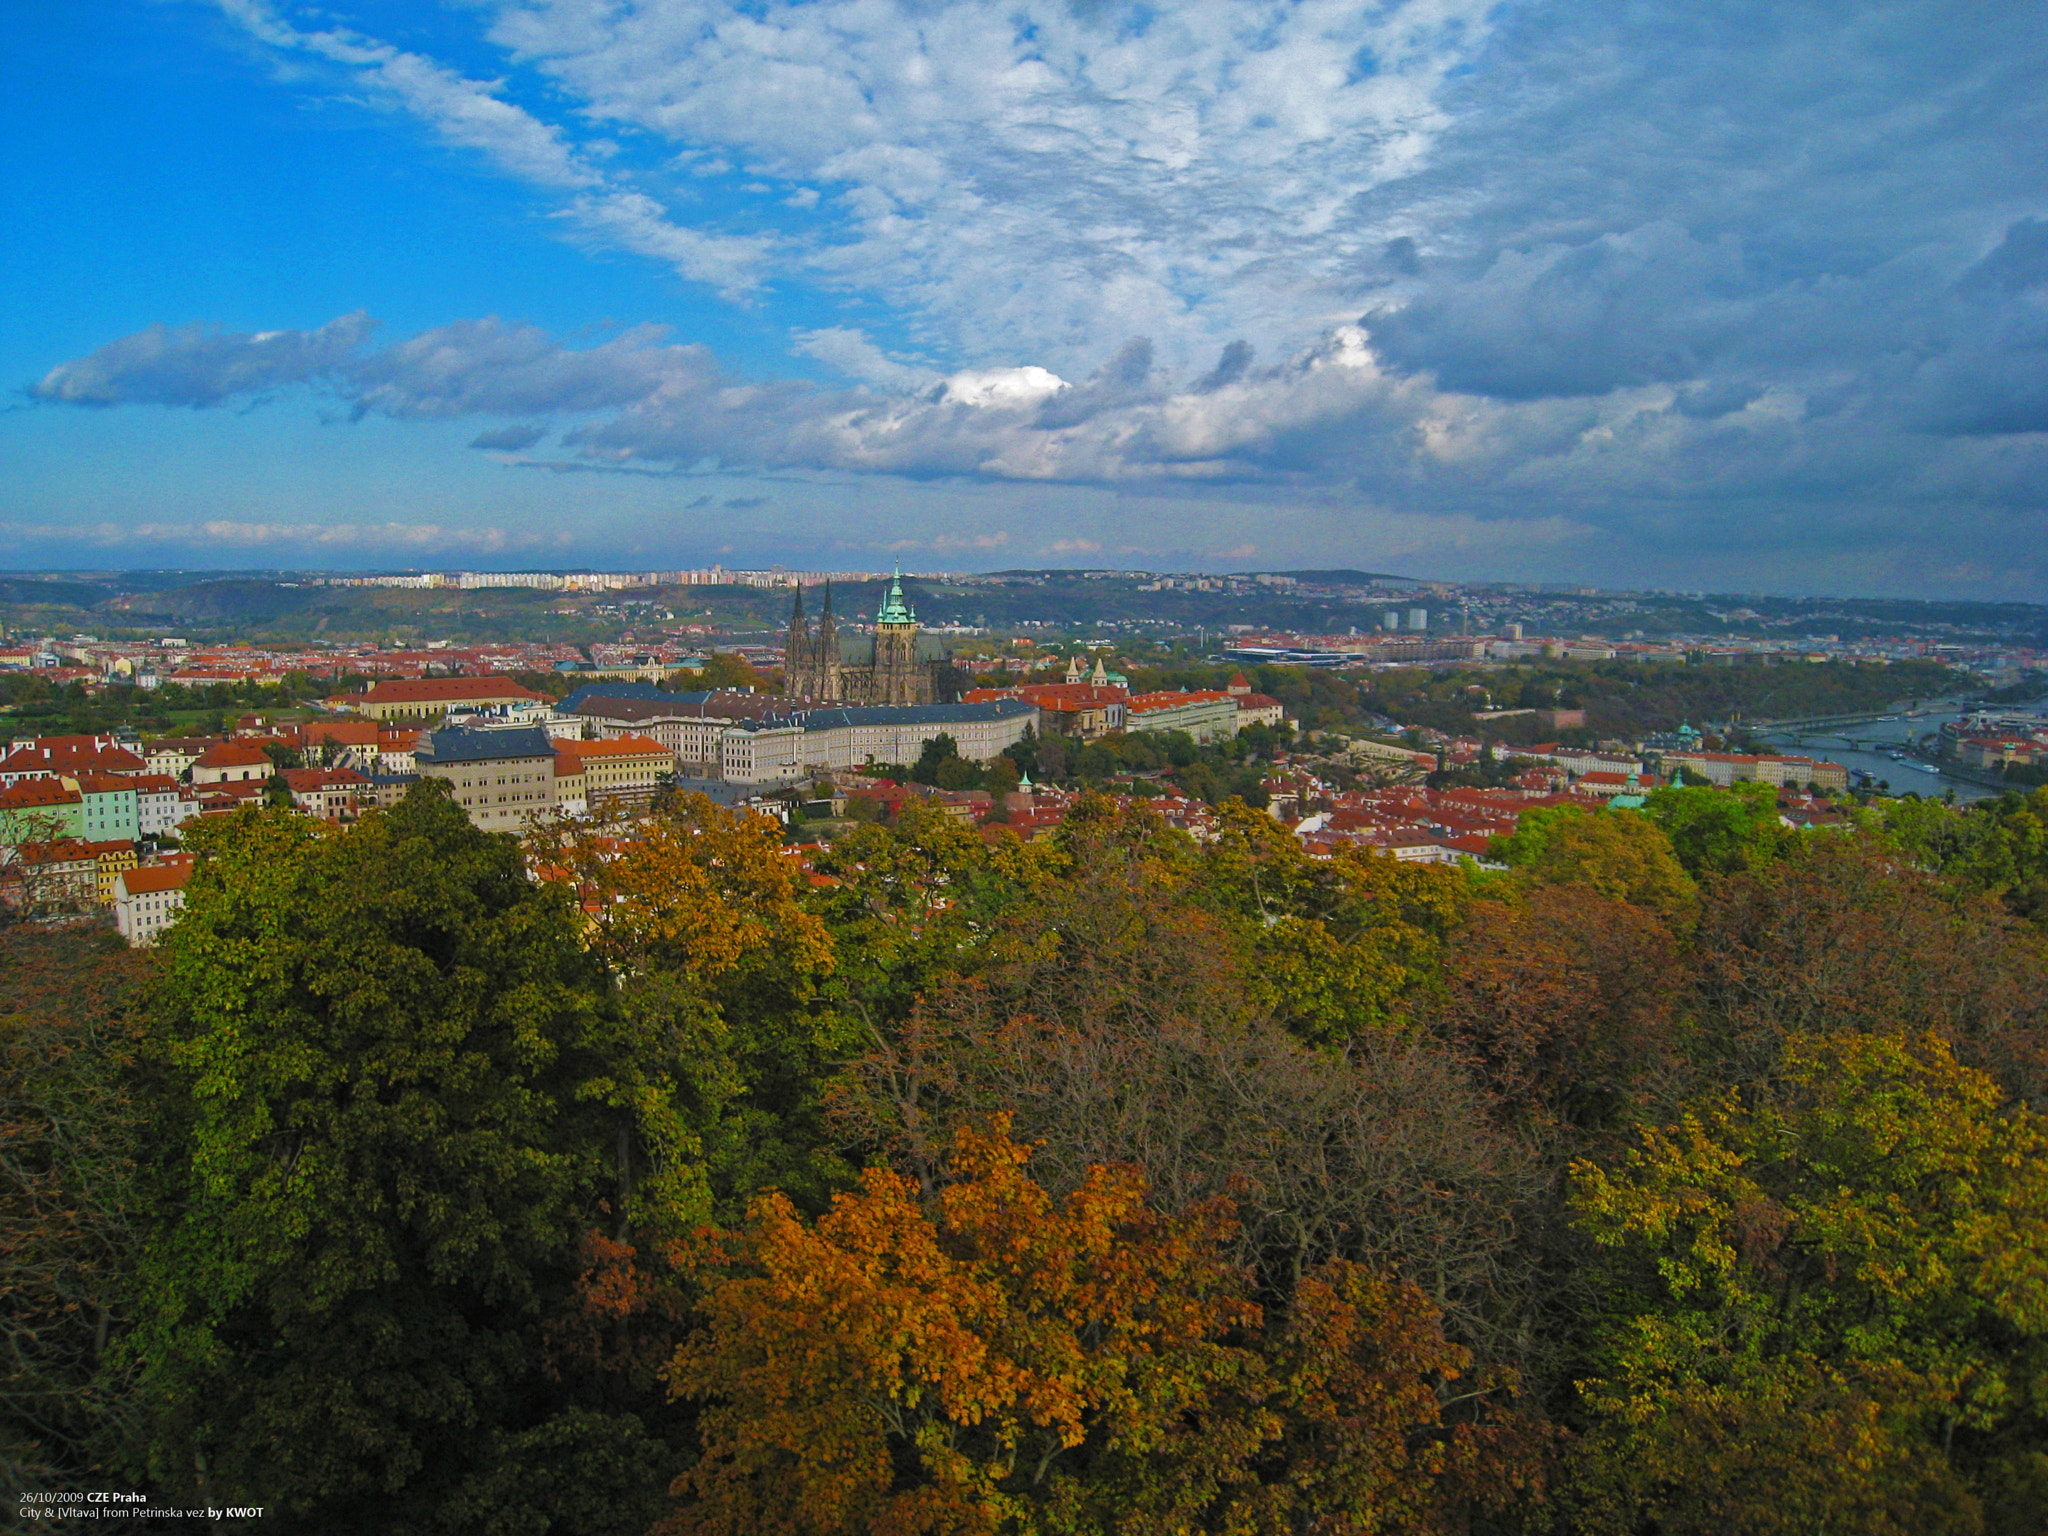 Canon DIGITAL IXUS 860 IS sample photo. Cze praha [autumn city view] oct 2009 by kwot photography